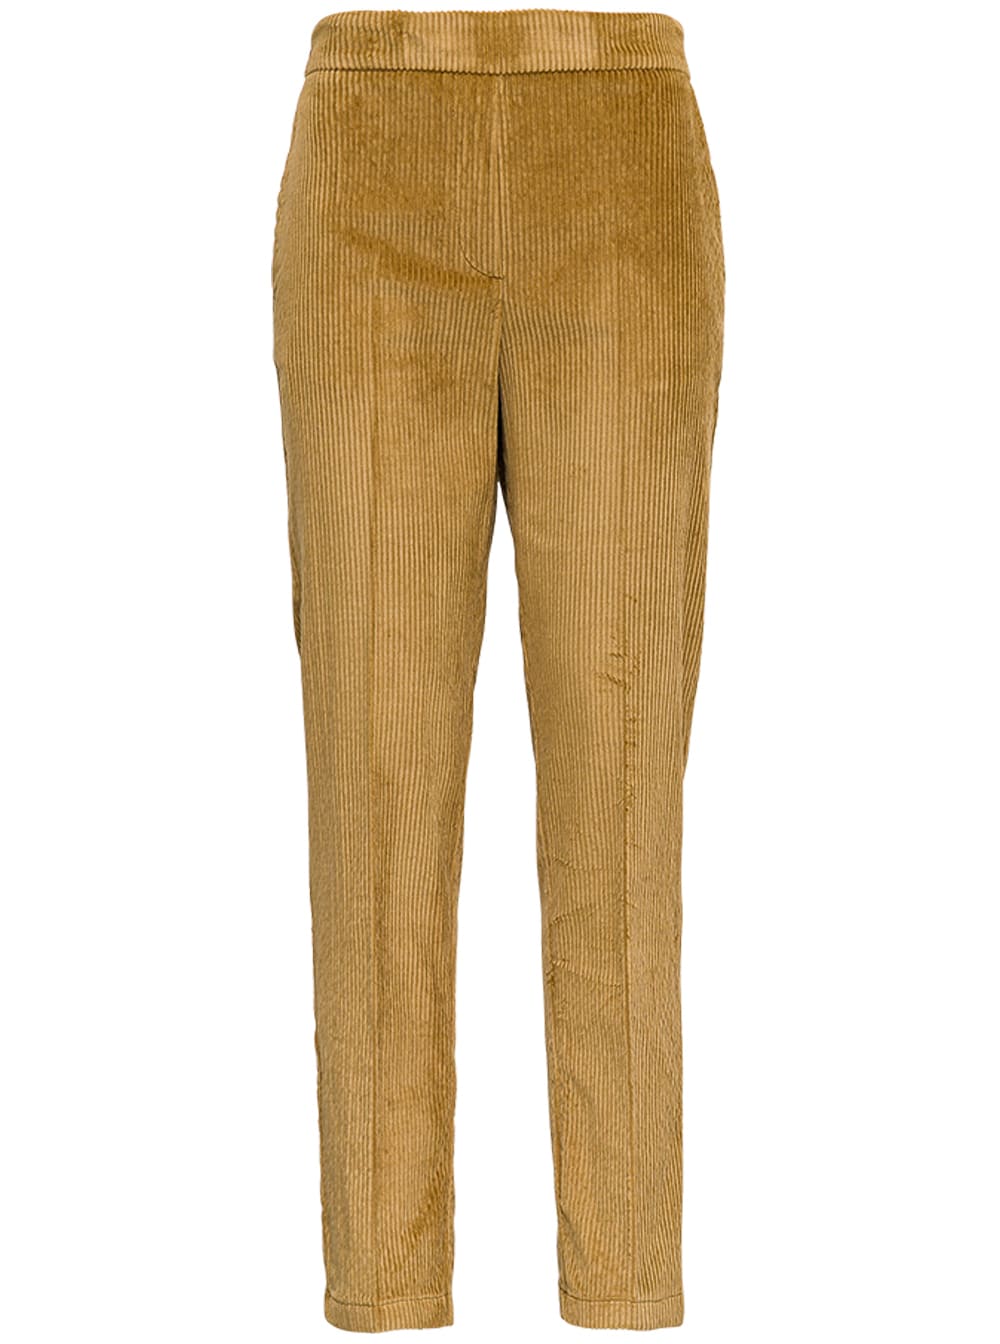 Momonì Haiti Camel-colored Velvet Pants